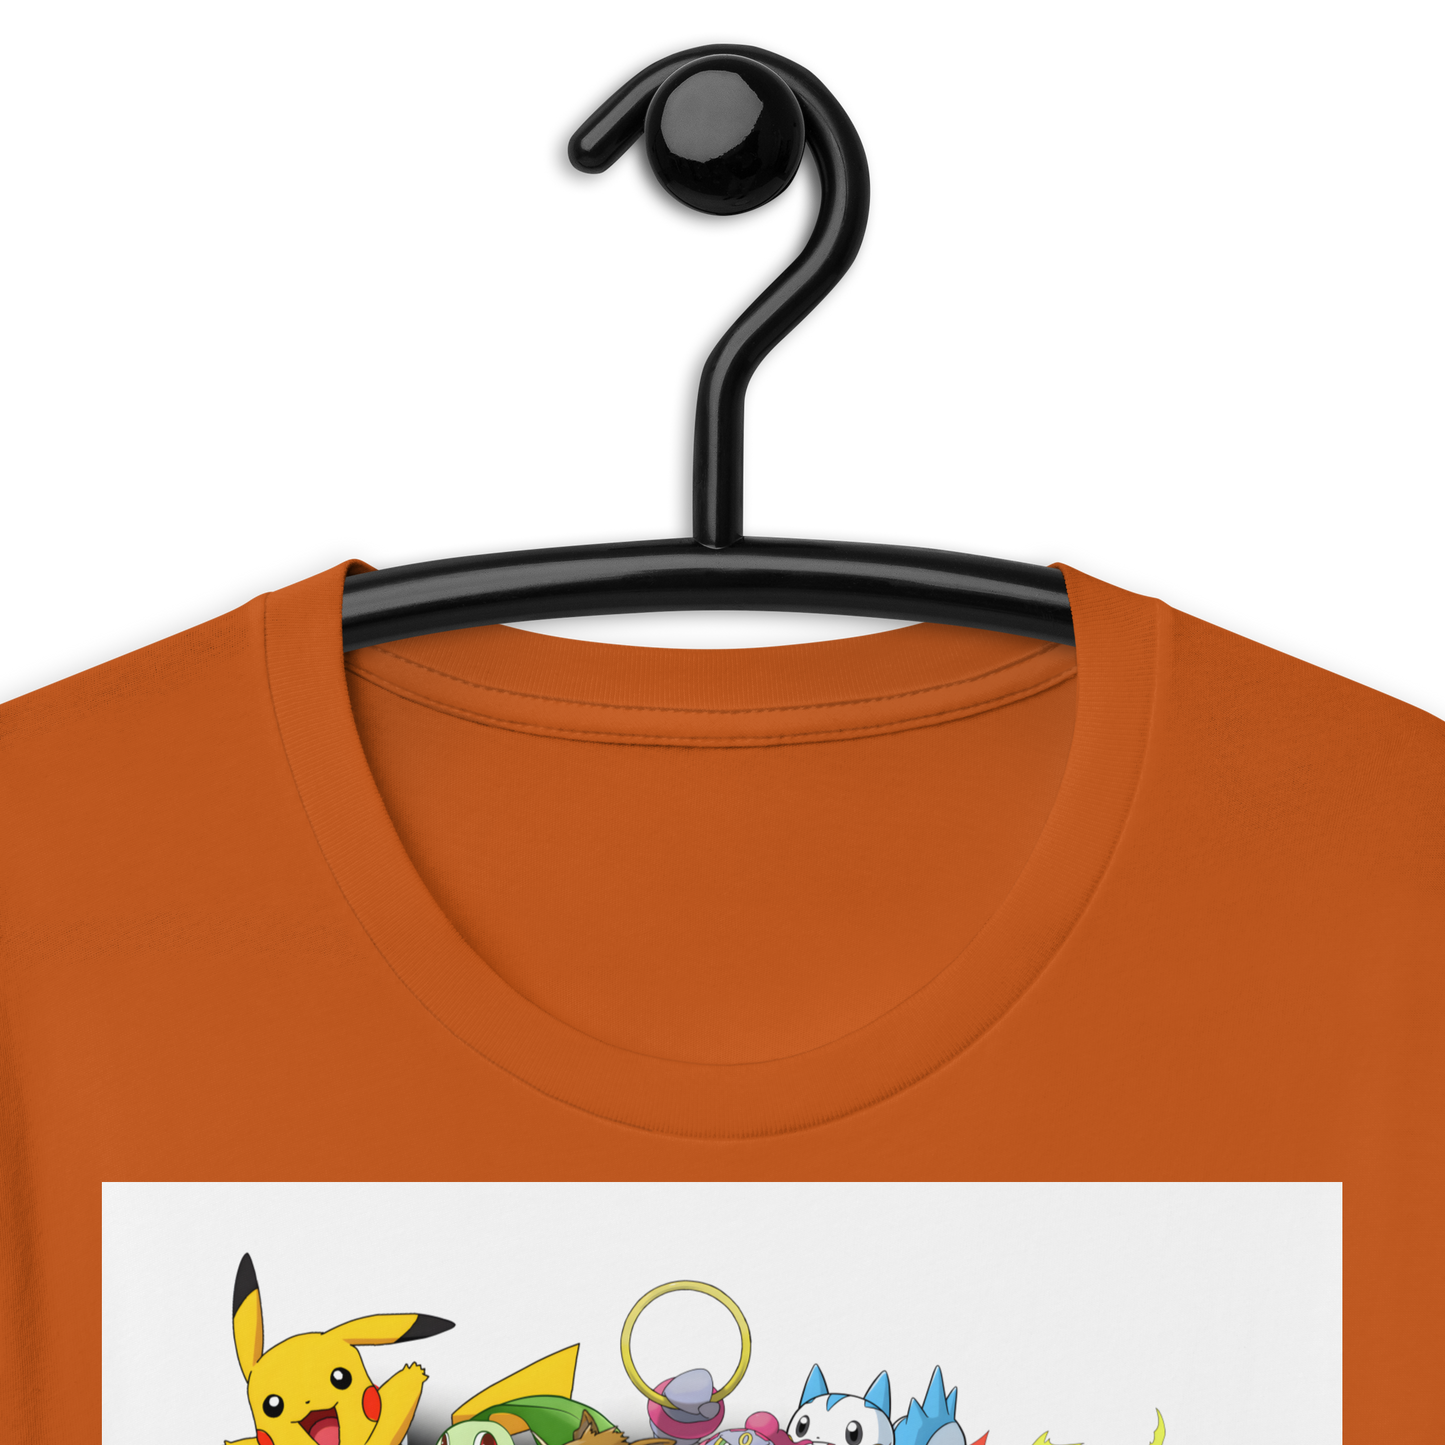 Pokemon Movie Unisex t-shirt